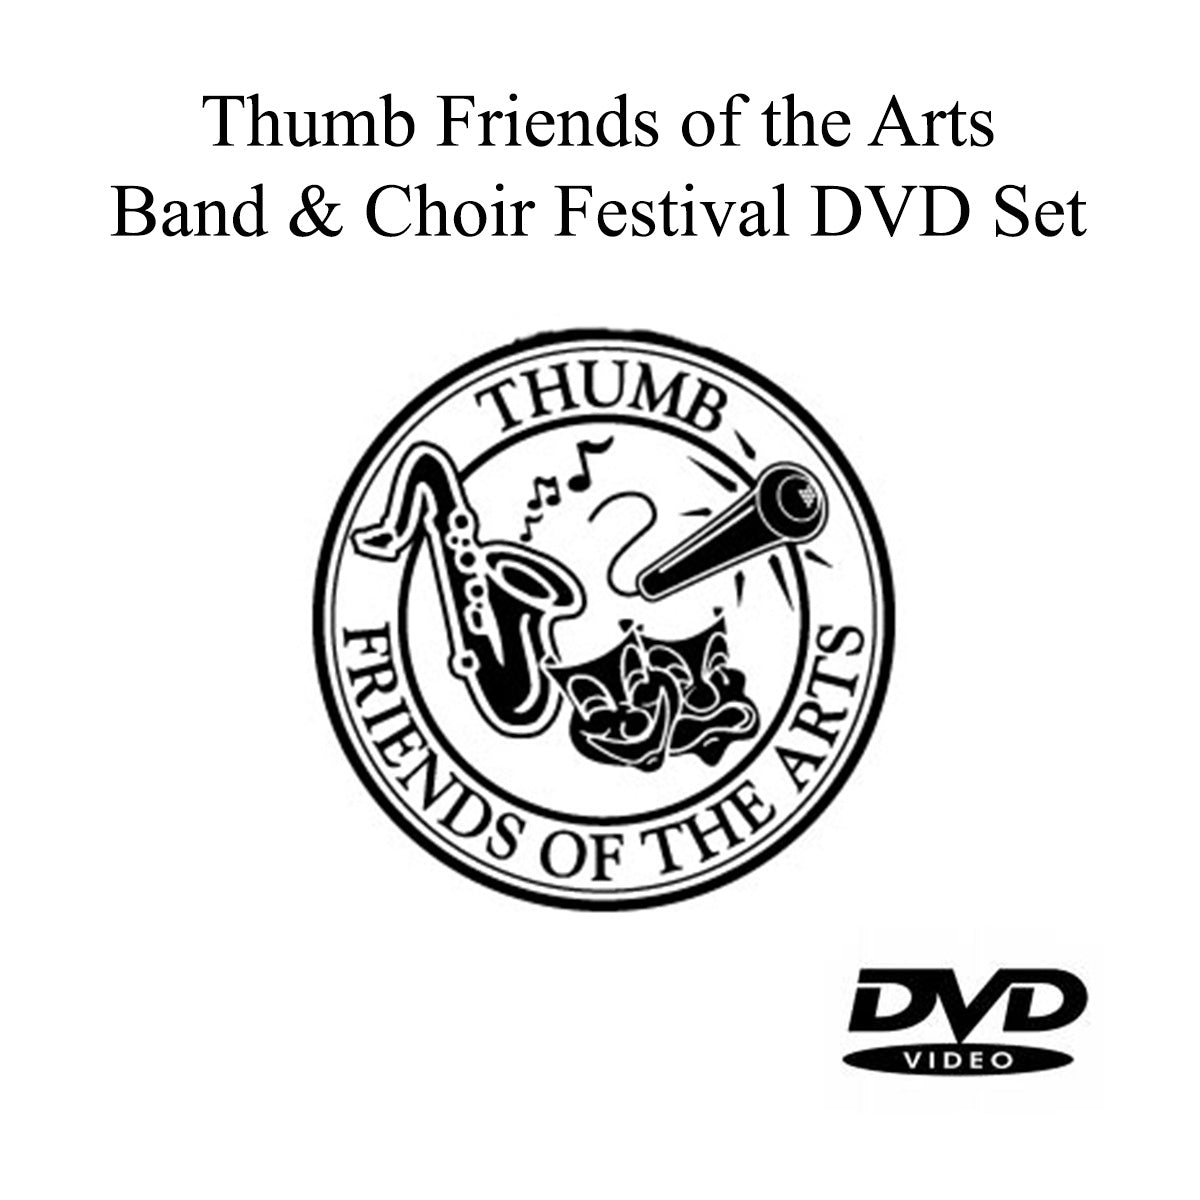 TFOTA Band & Choir Festival DVDs